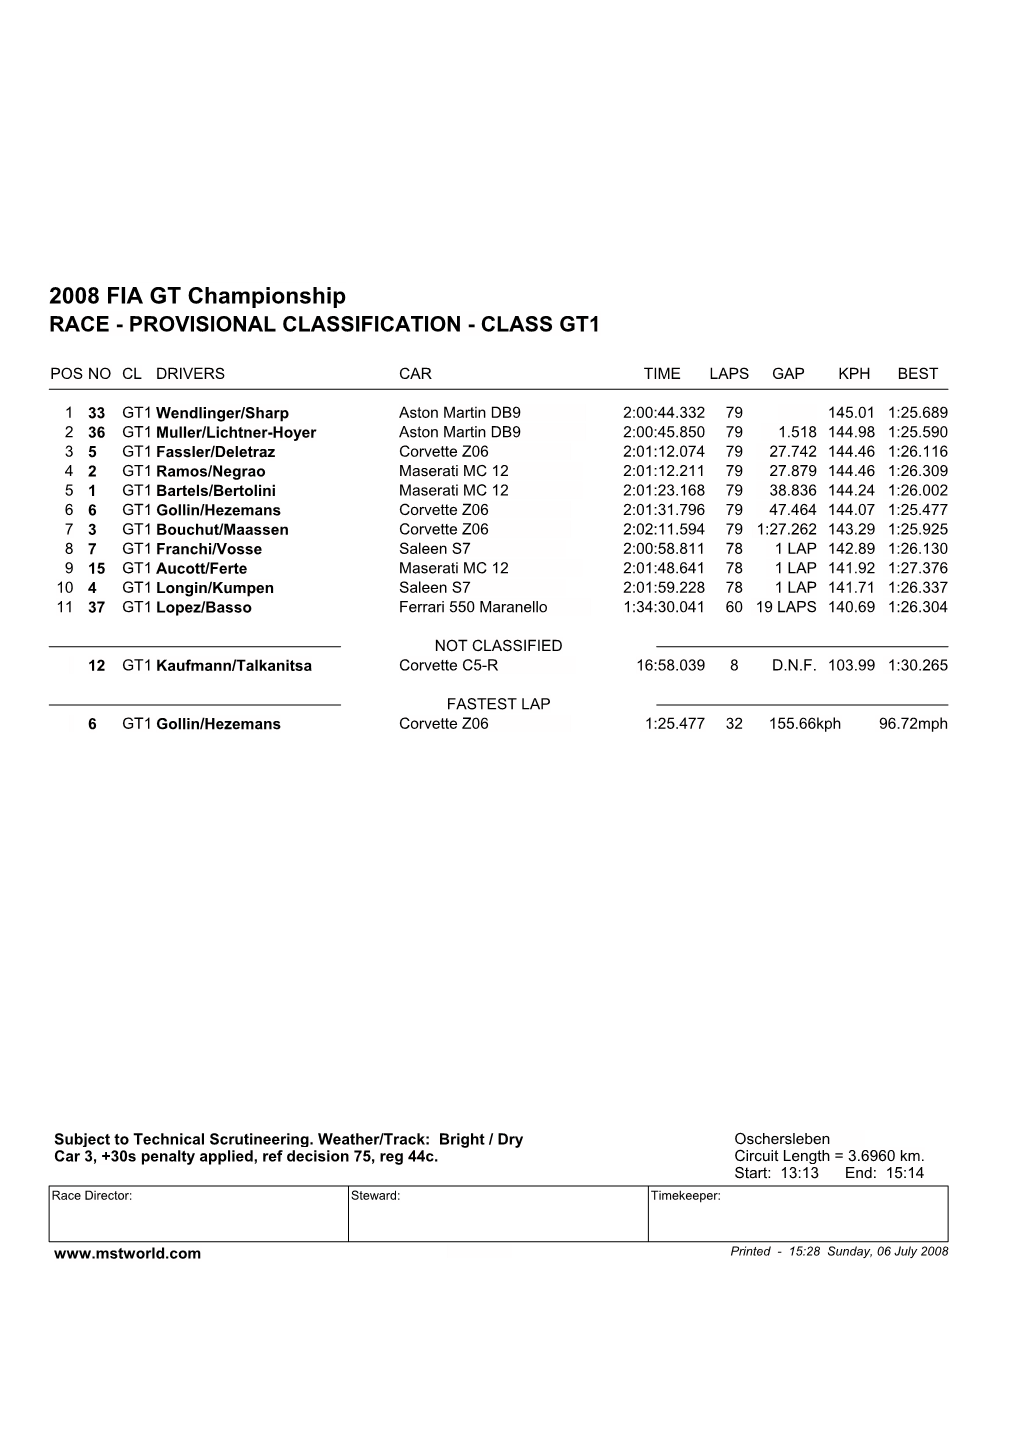 2008 FIA GT Championship RACE - PROVISIONAL CLASSIFICATION - CLASS GT1